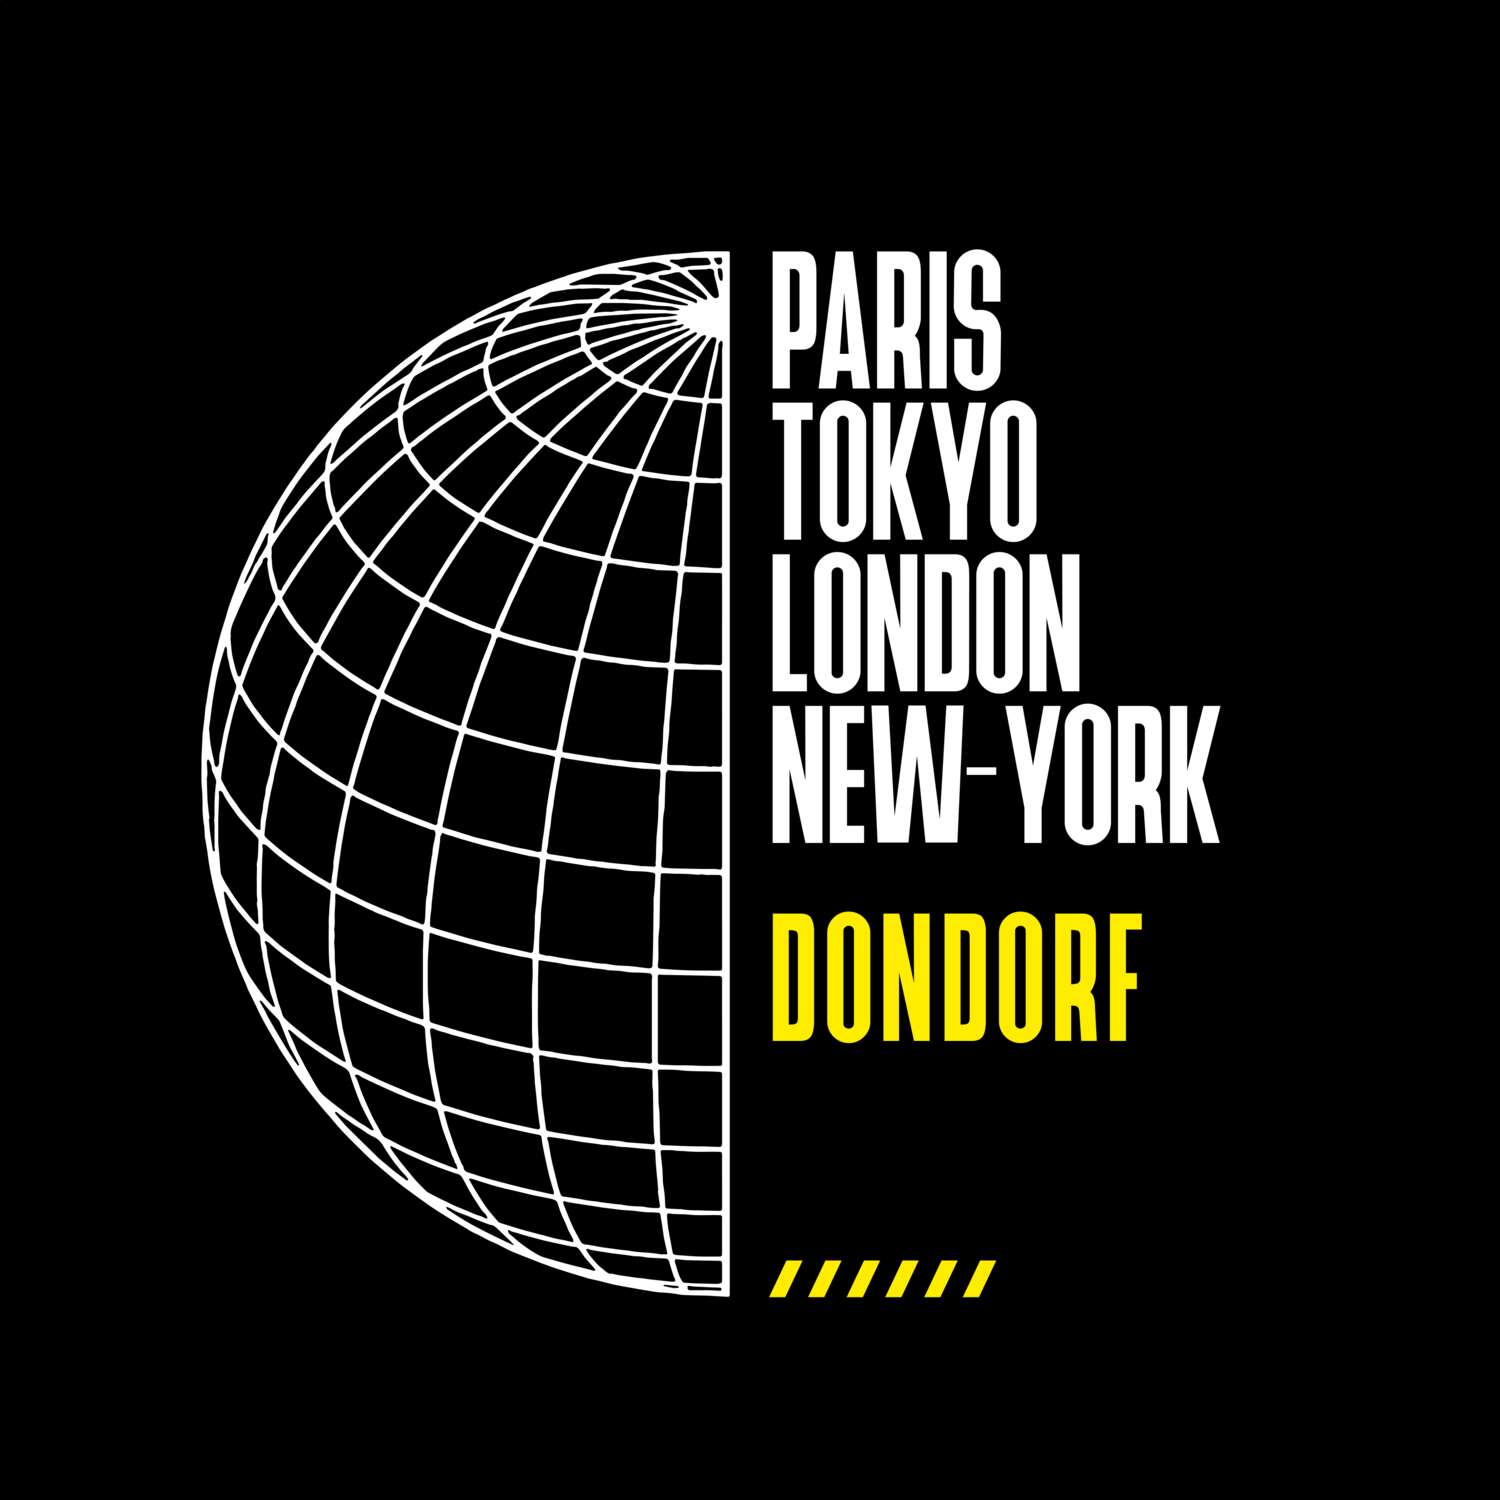 Dondorf T-Shirt »Paris Tokyo London«